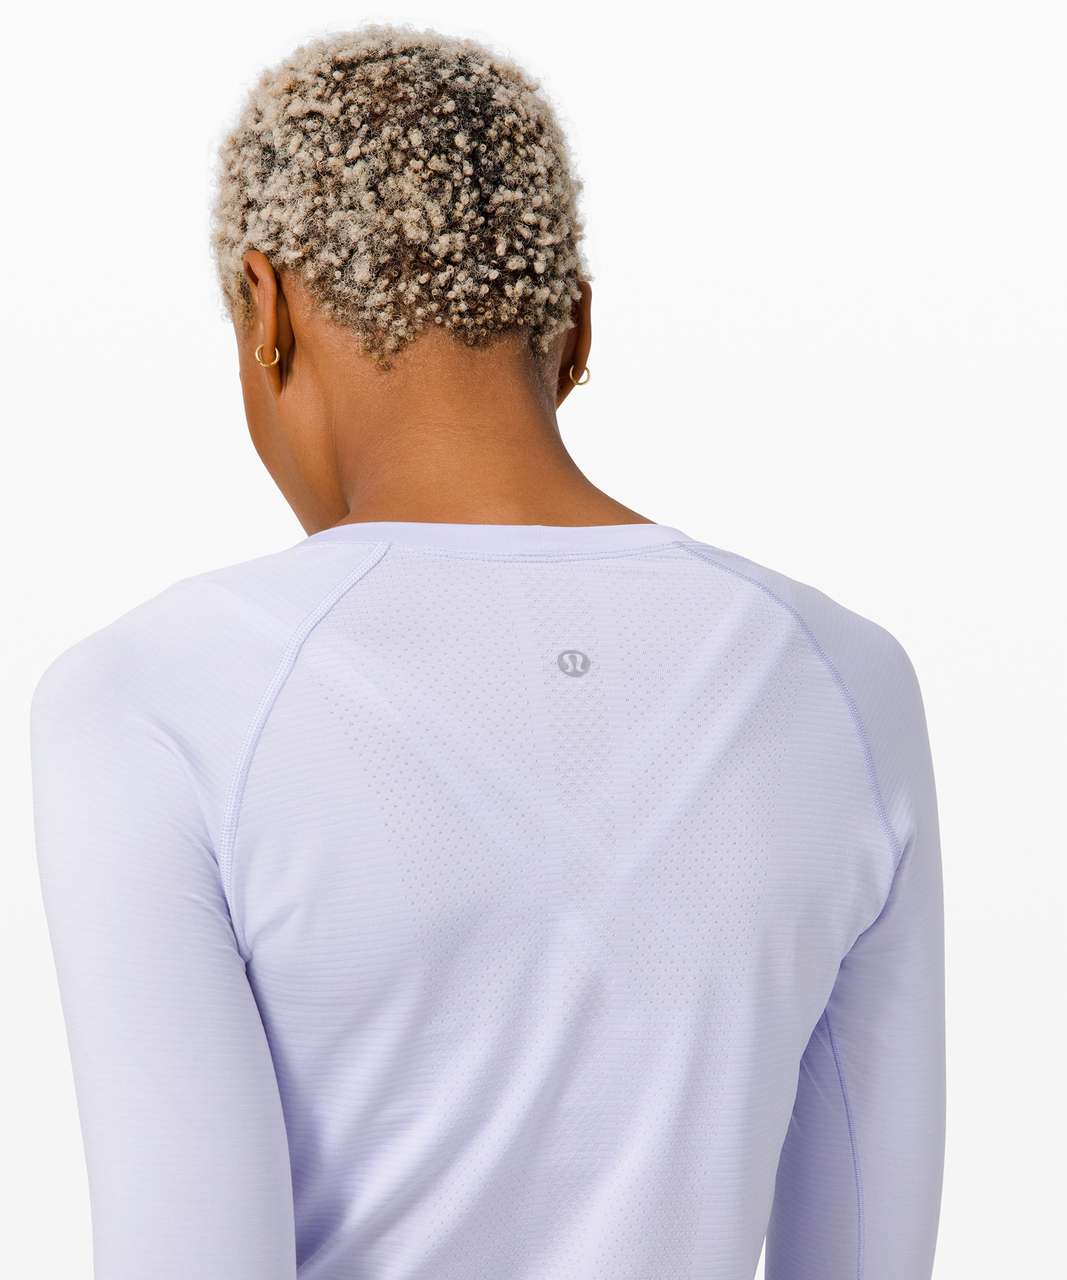 Lululemon Swiftly Tech Long Sleeve Shirt 2.0 *Race Length - Canyon